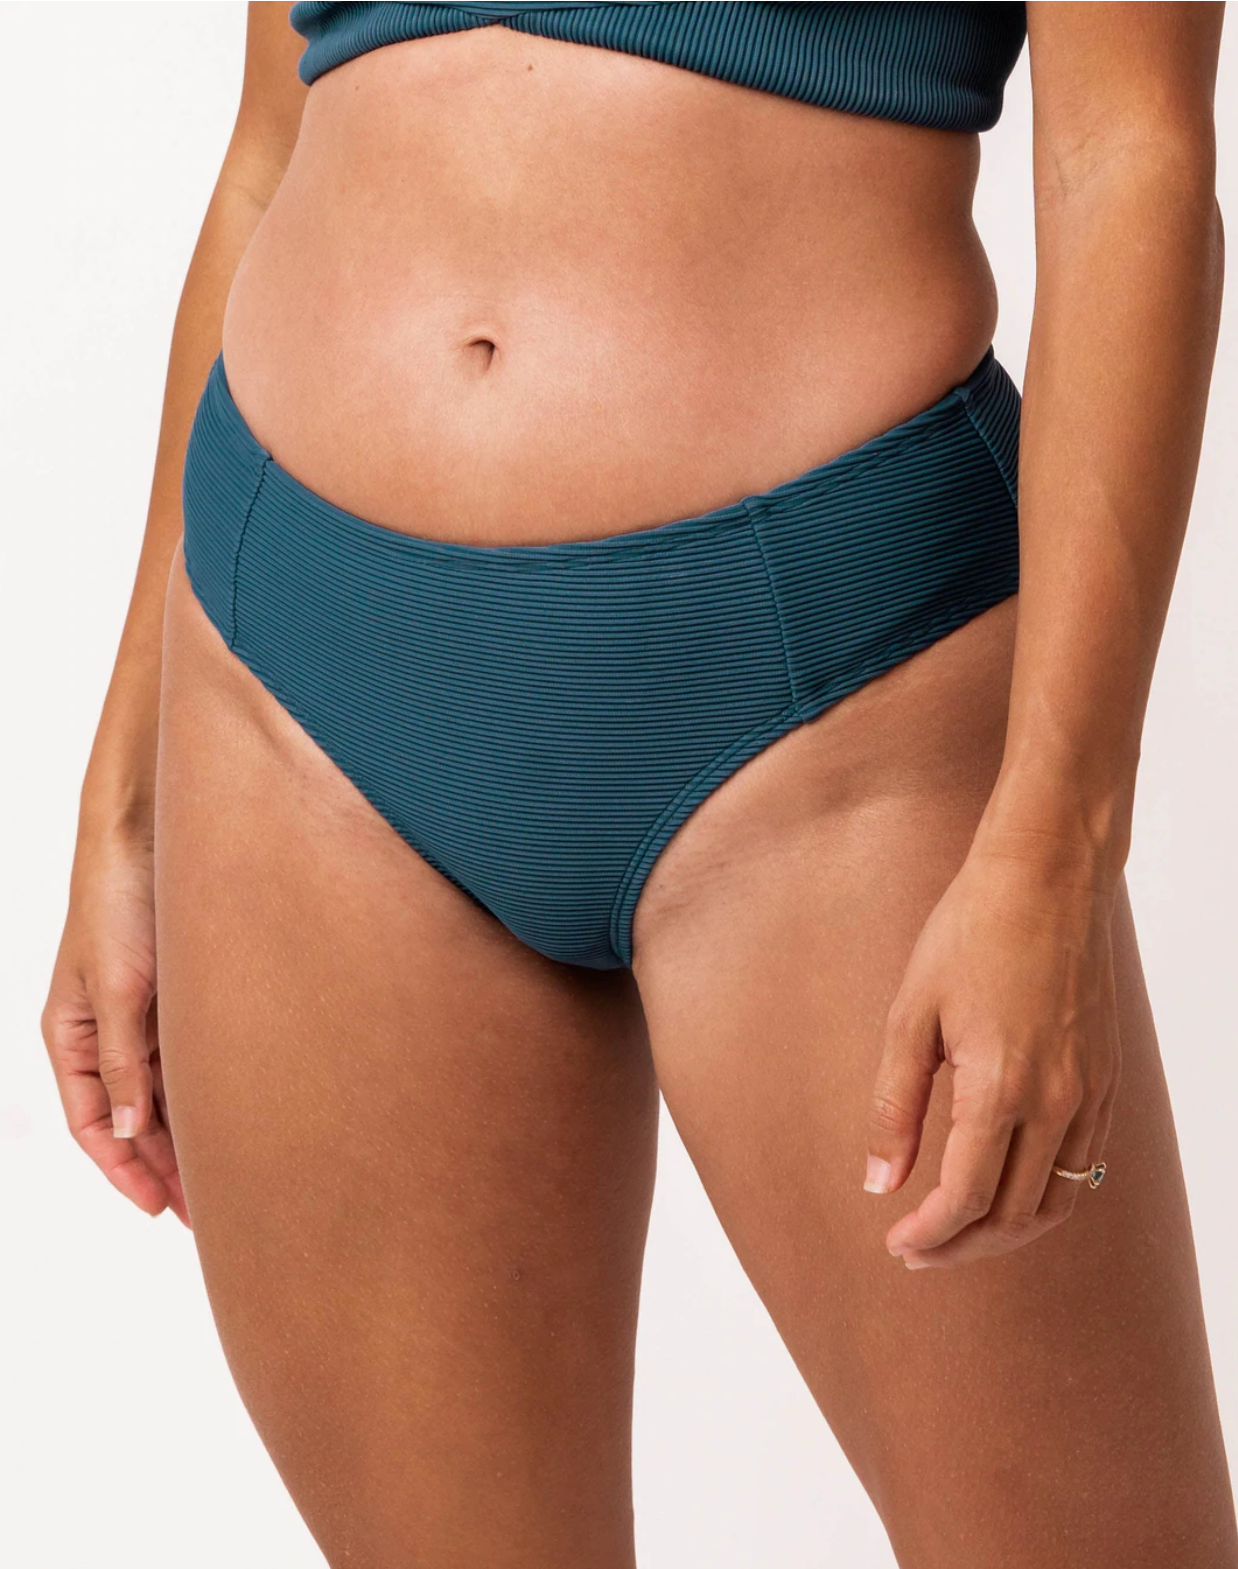 Plus Cup Size Swimwear with Sass: Introducing Offshore Swimwear, The Body  Positive, Fashion-Forward Bikini Brand